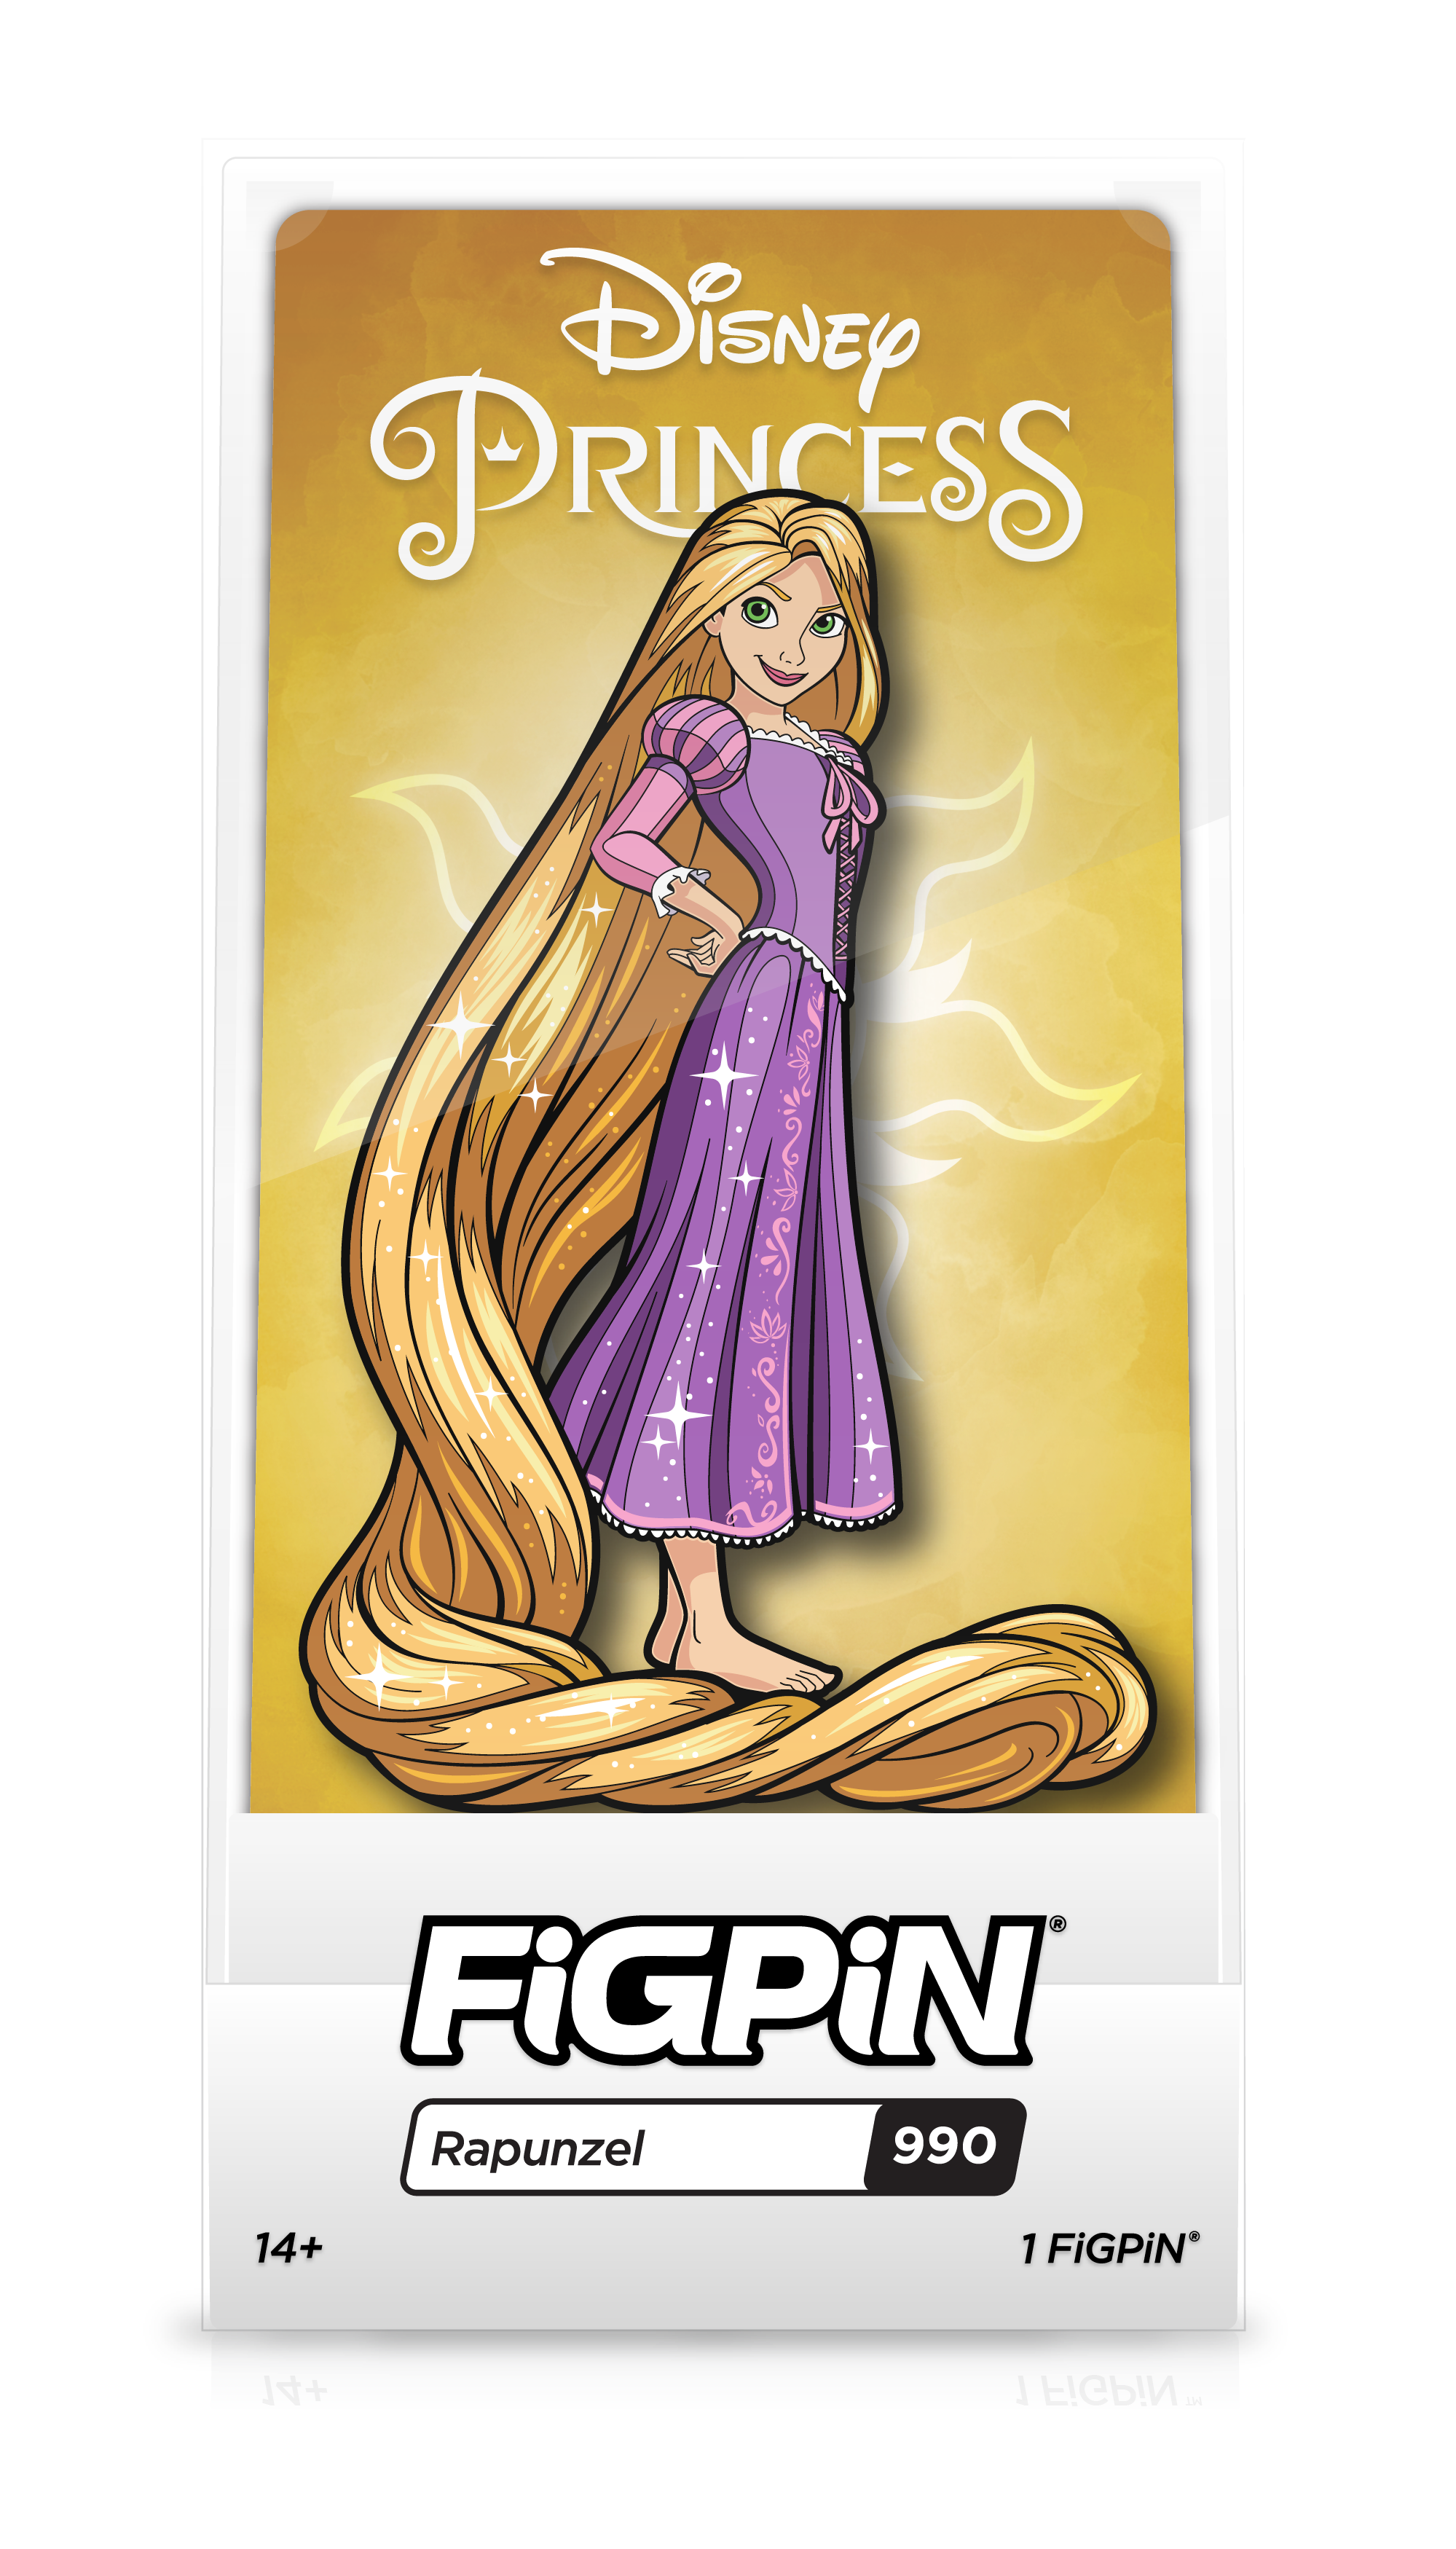 Rapunzel (990)